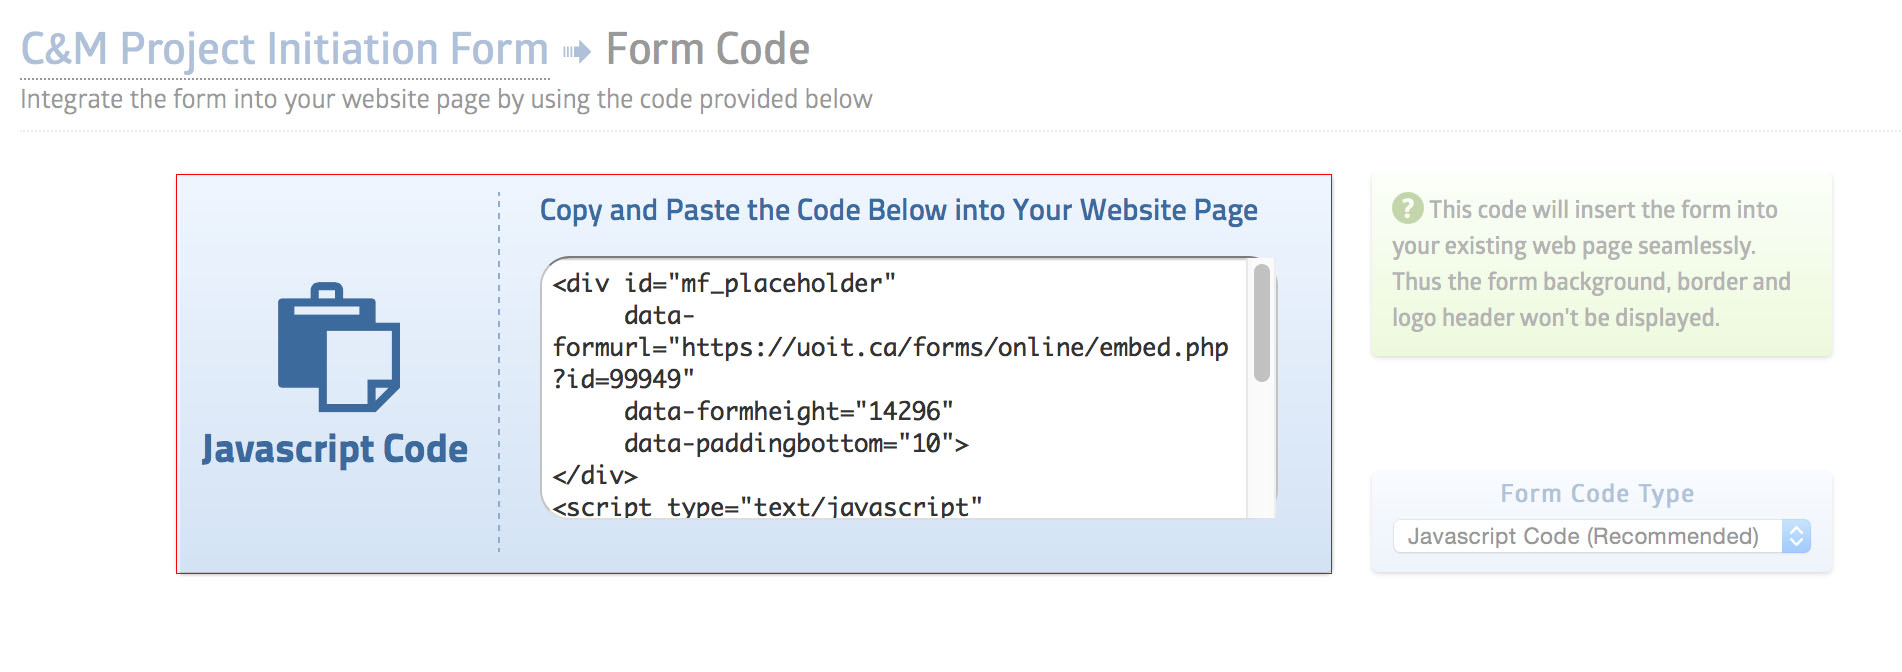 Copy Code screenshot from Machform